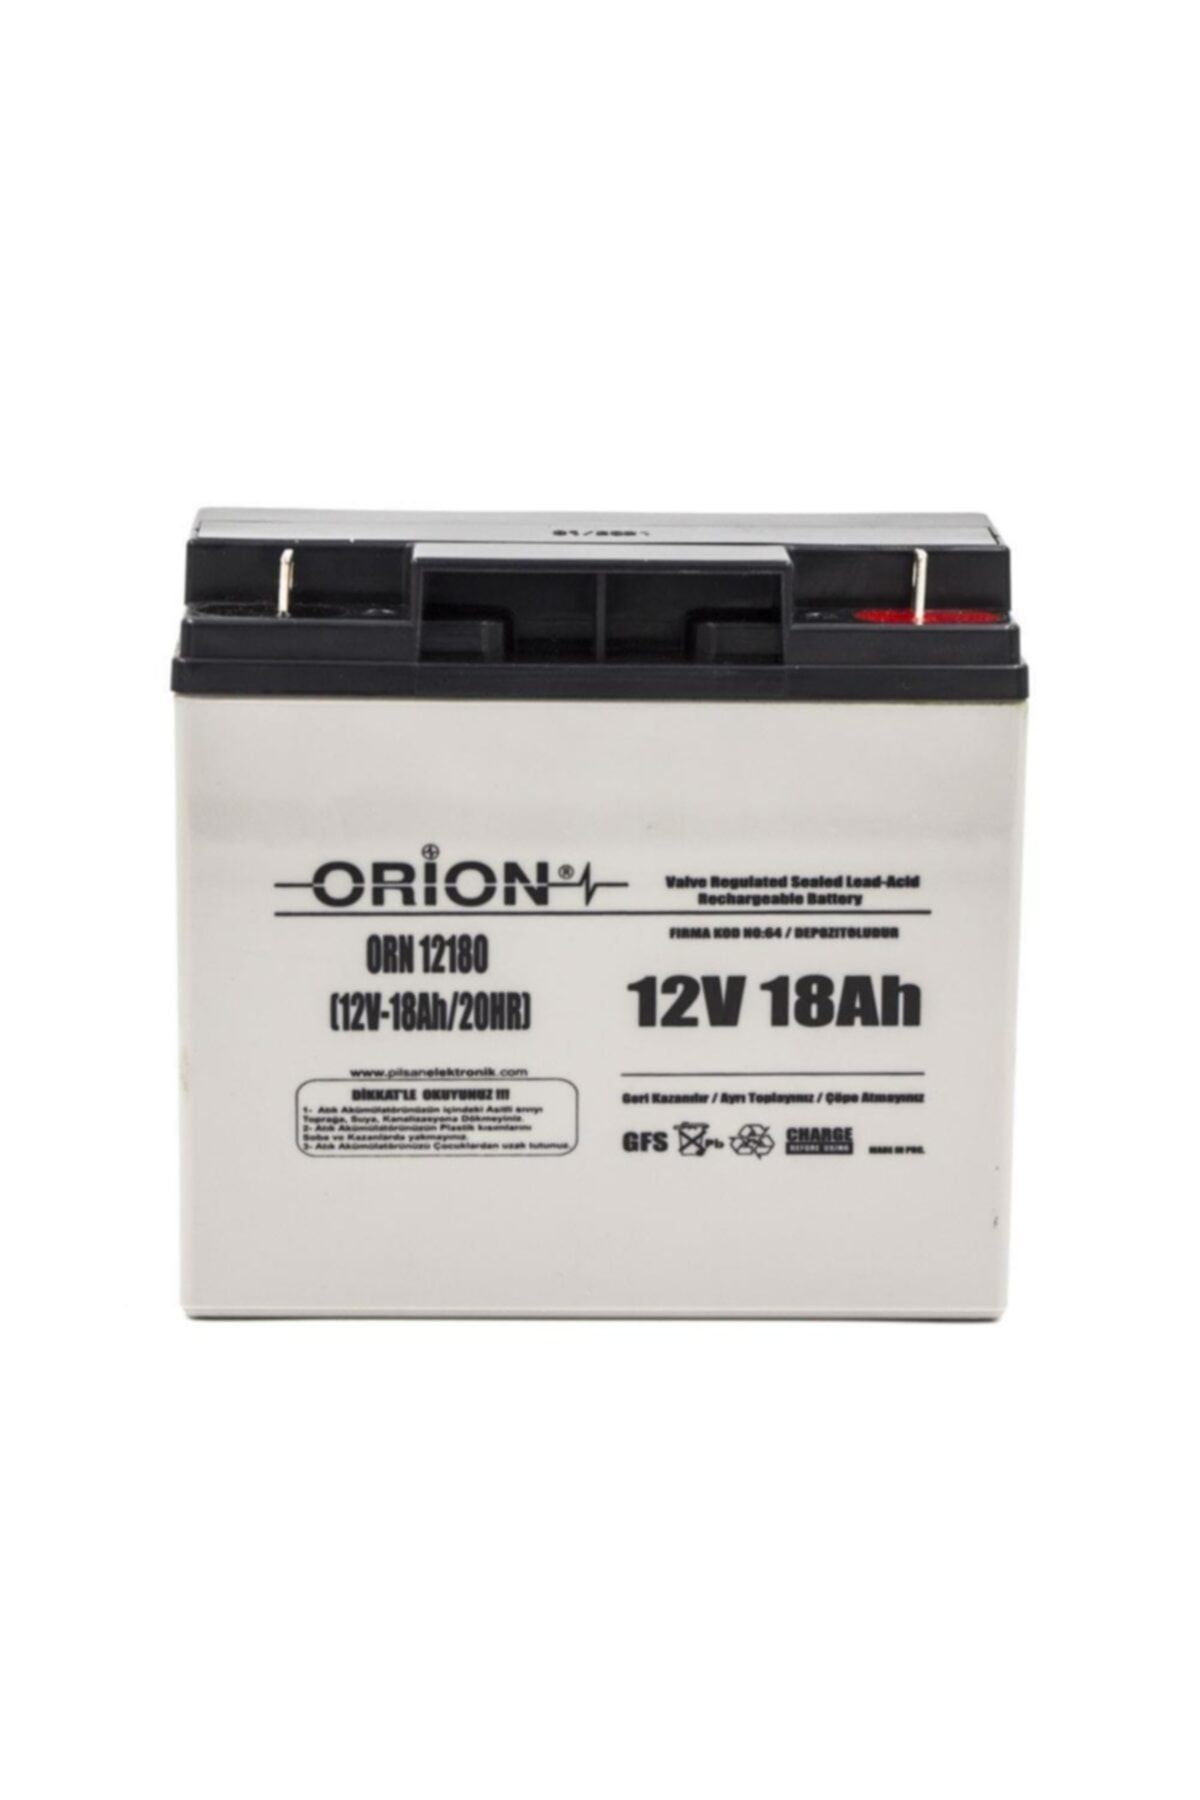 Orion Orn12180 12v 18ah Bakımsız Kuru Akü